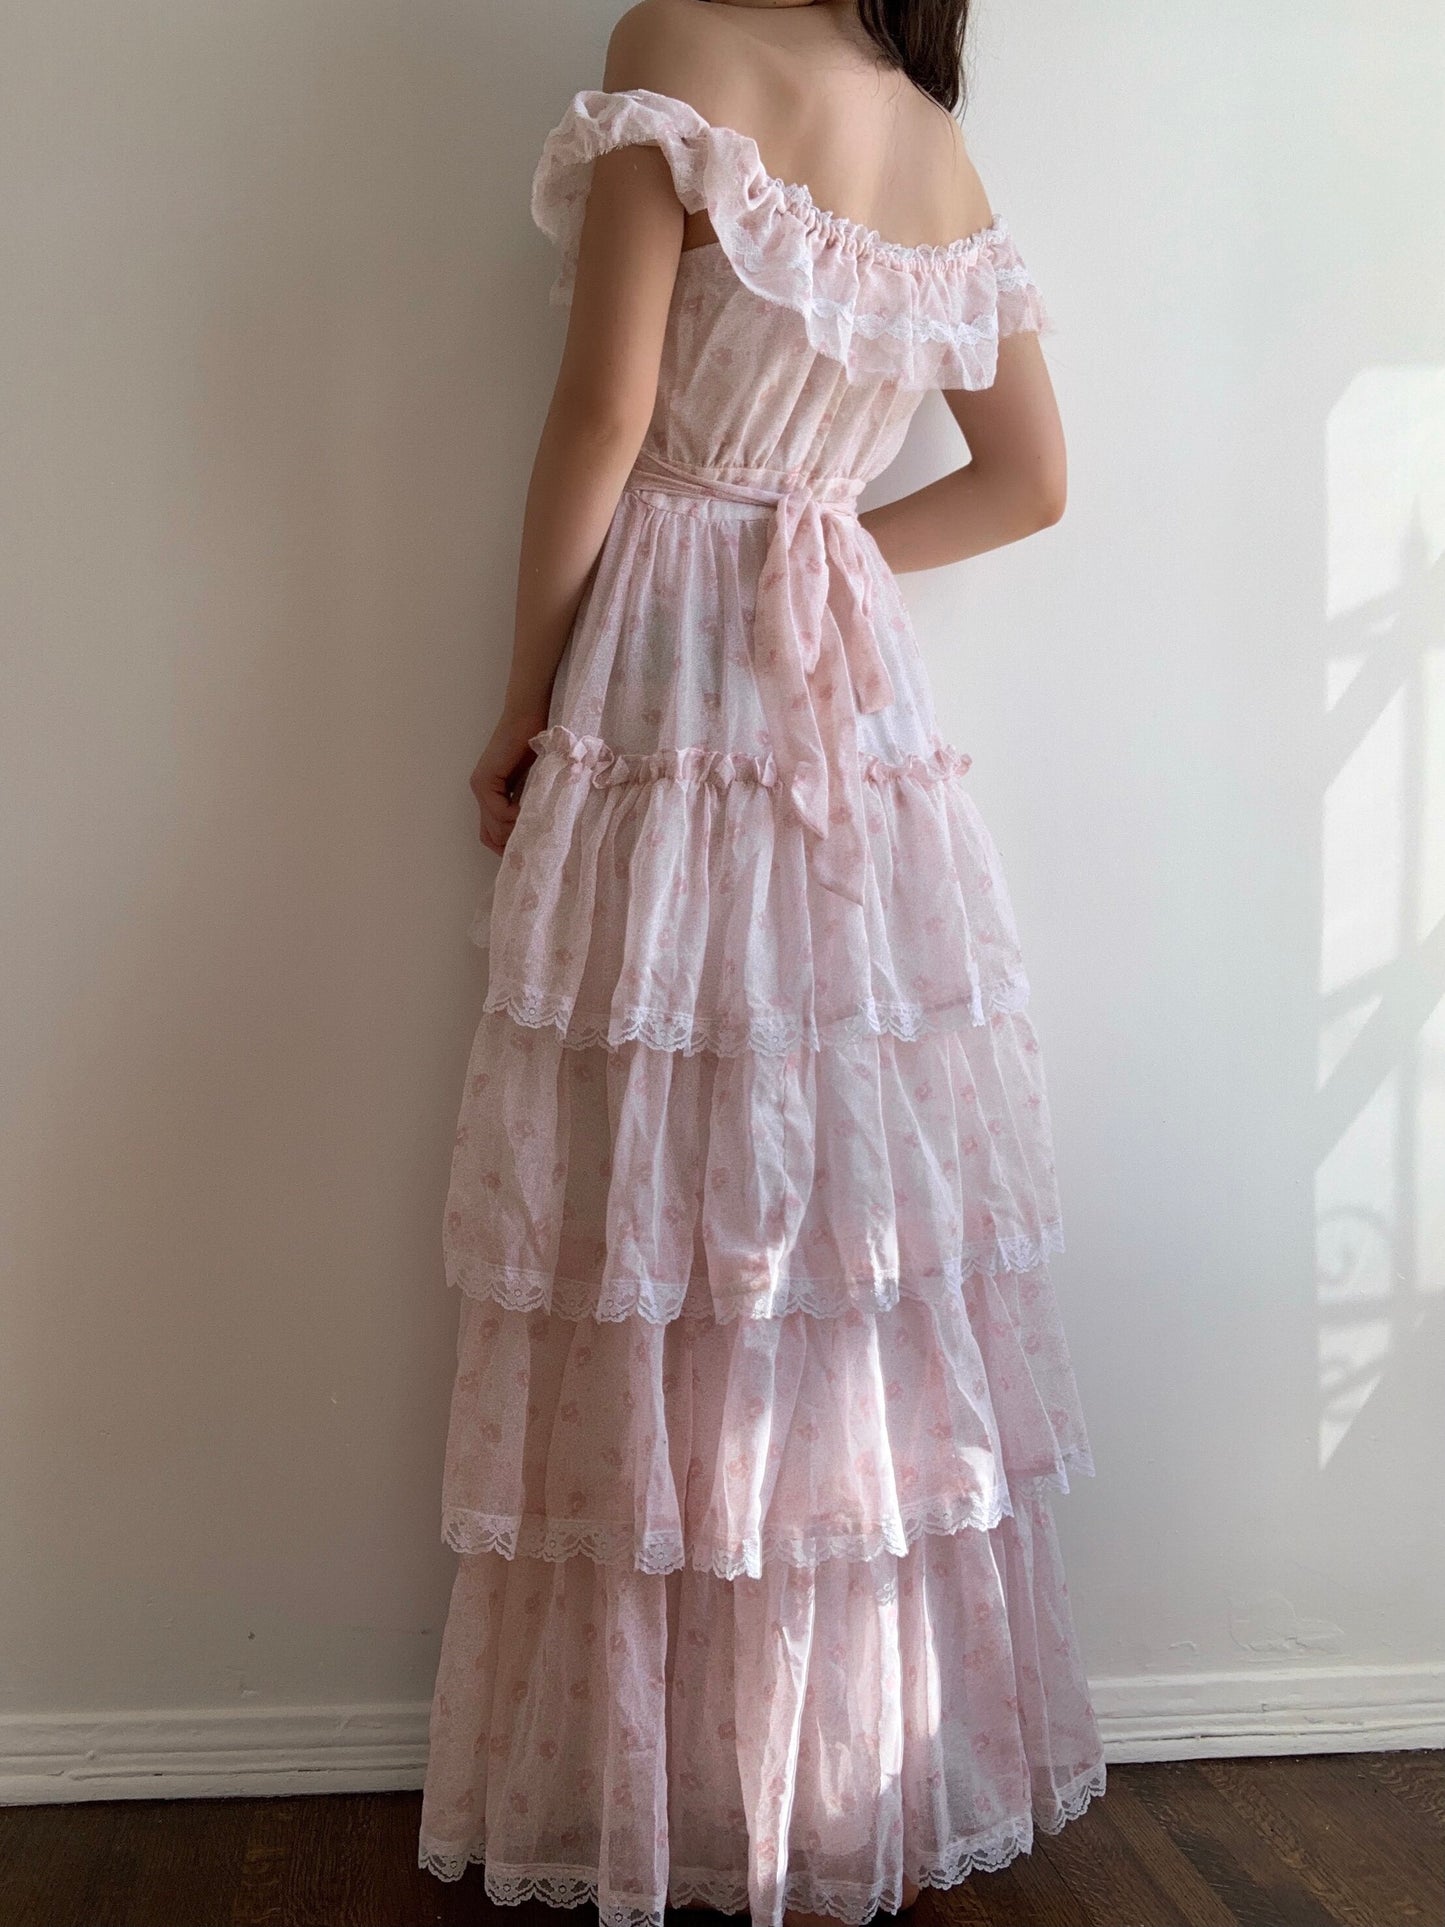 Gunne Sax Pink Ruffle Dress (XS/S)